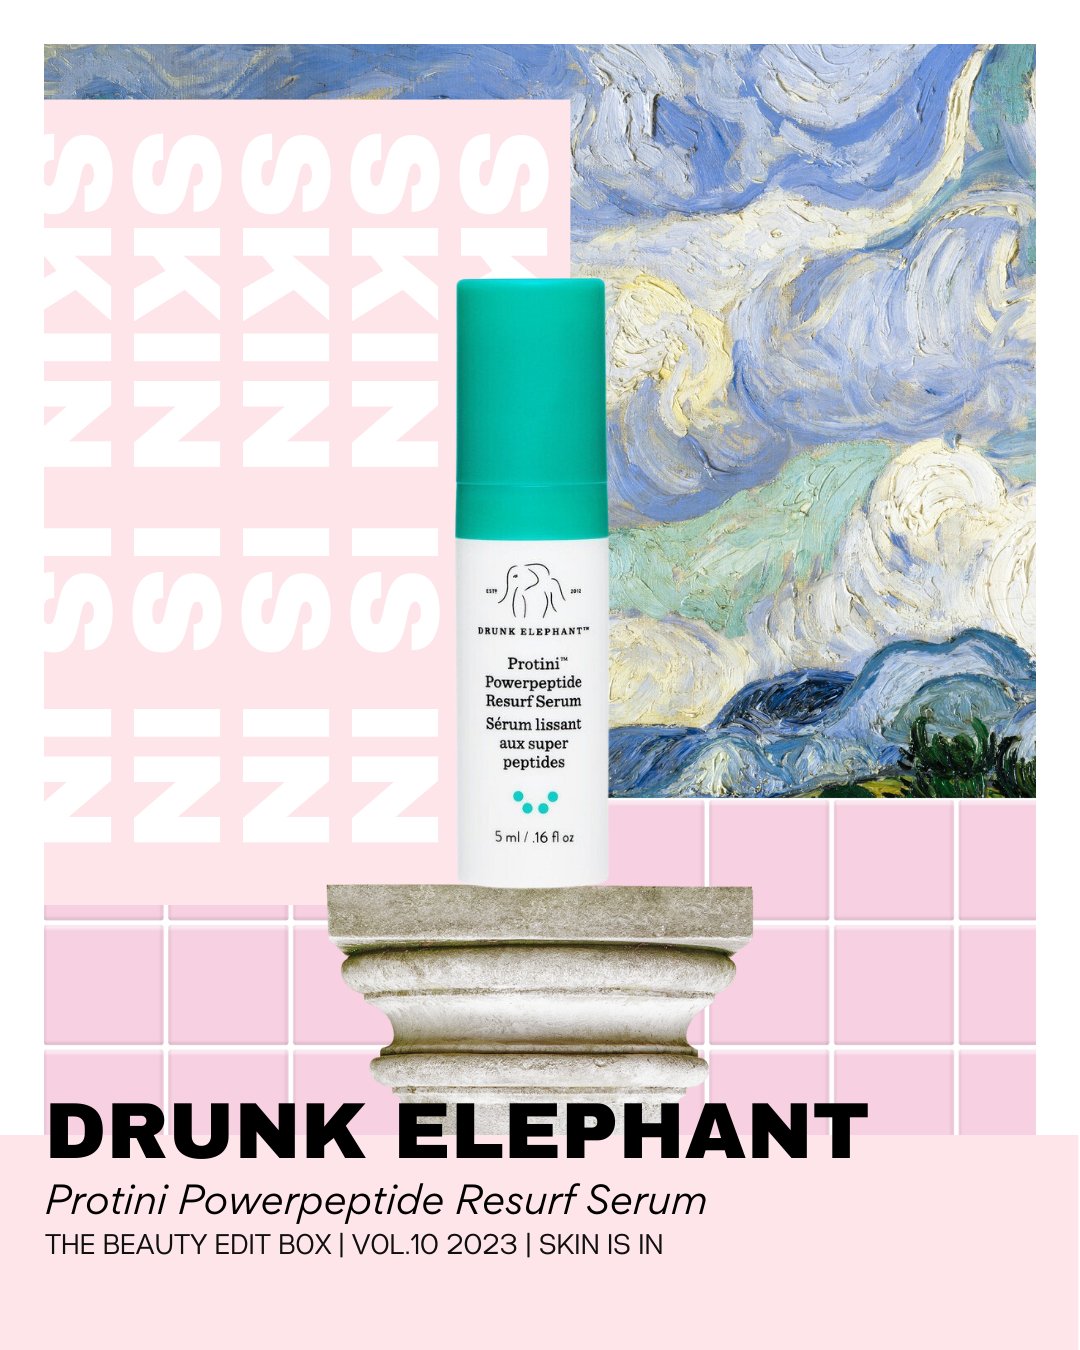 Inside The Beauty Edit Box Vol. 10: Drunk Elephant